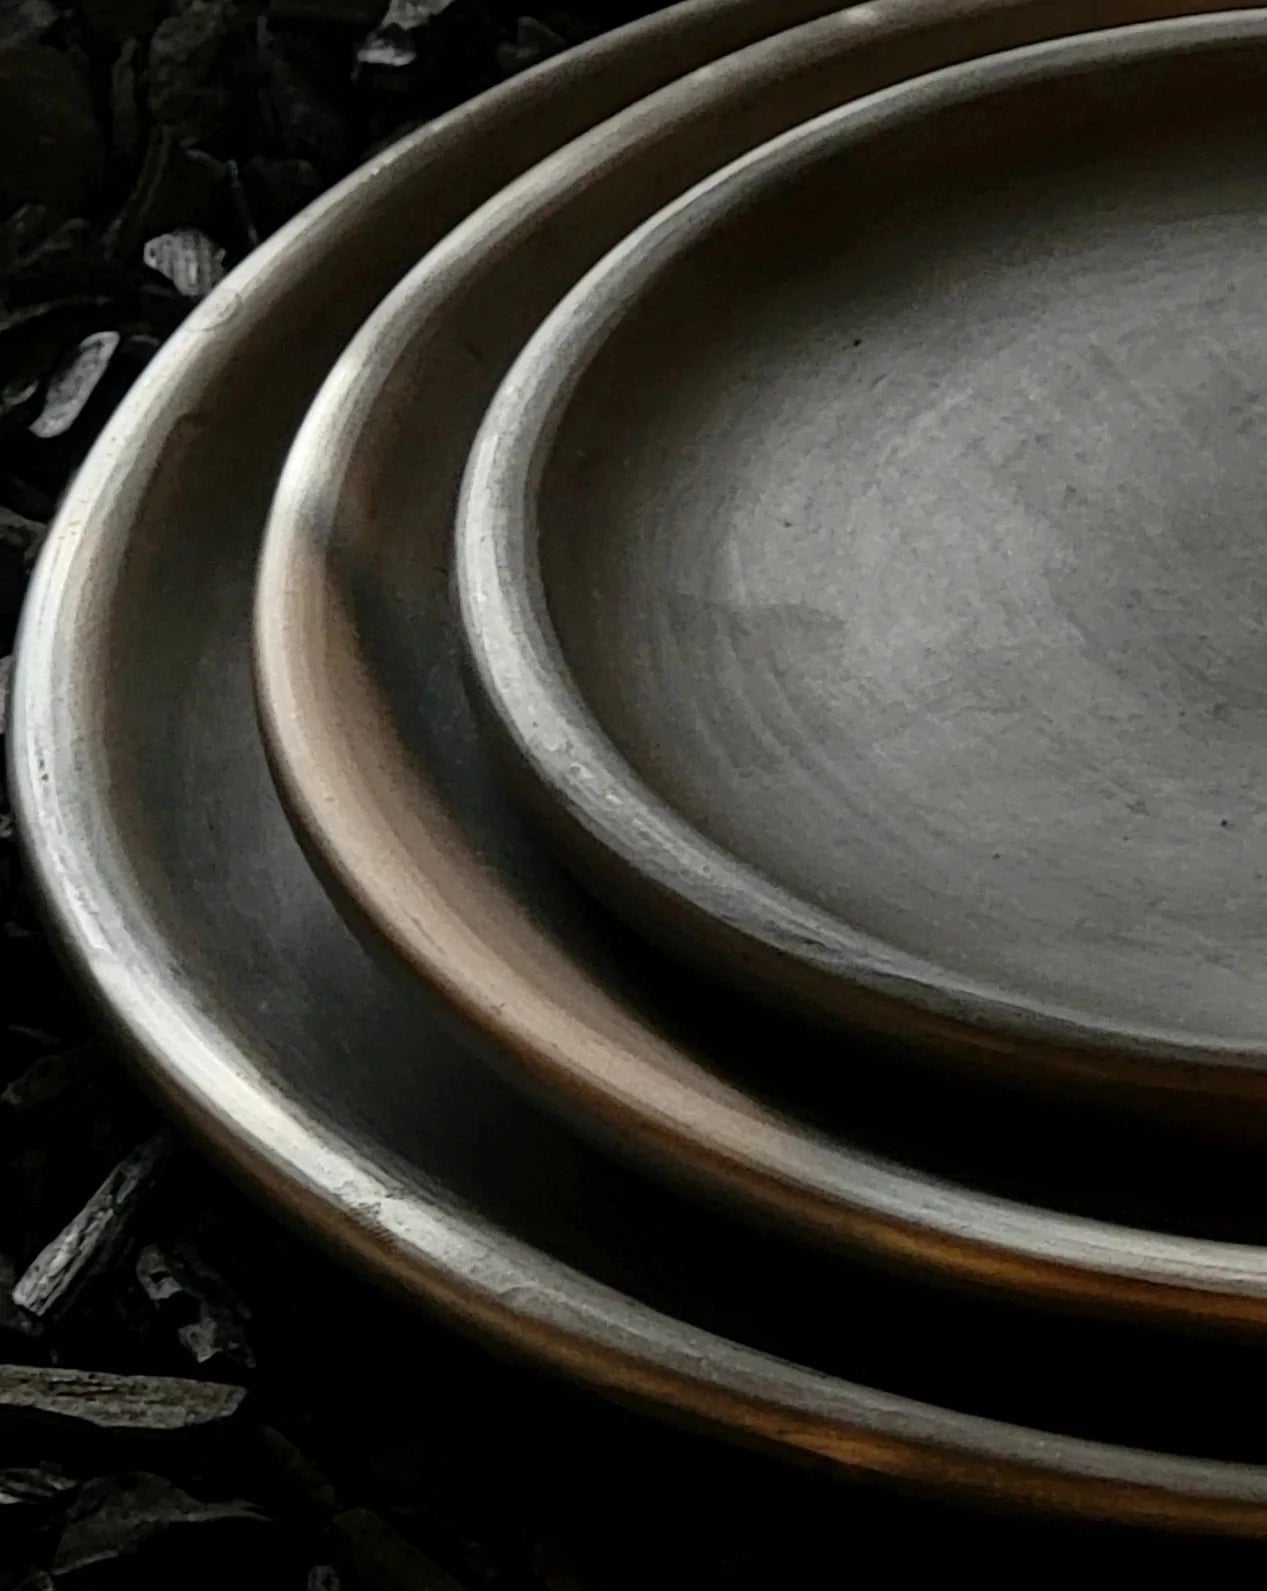 Oaxacan Pottery Plate Dinnerware Barro Negro 6.5”